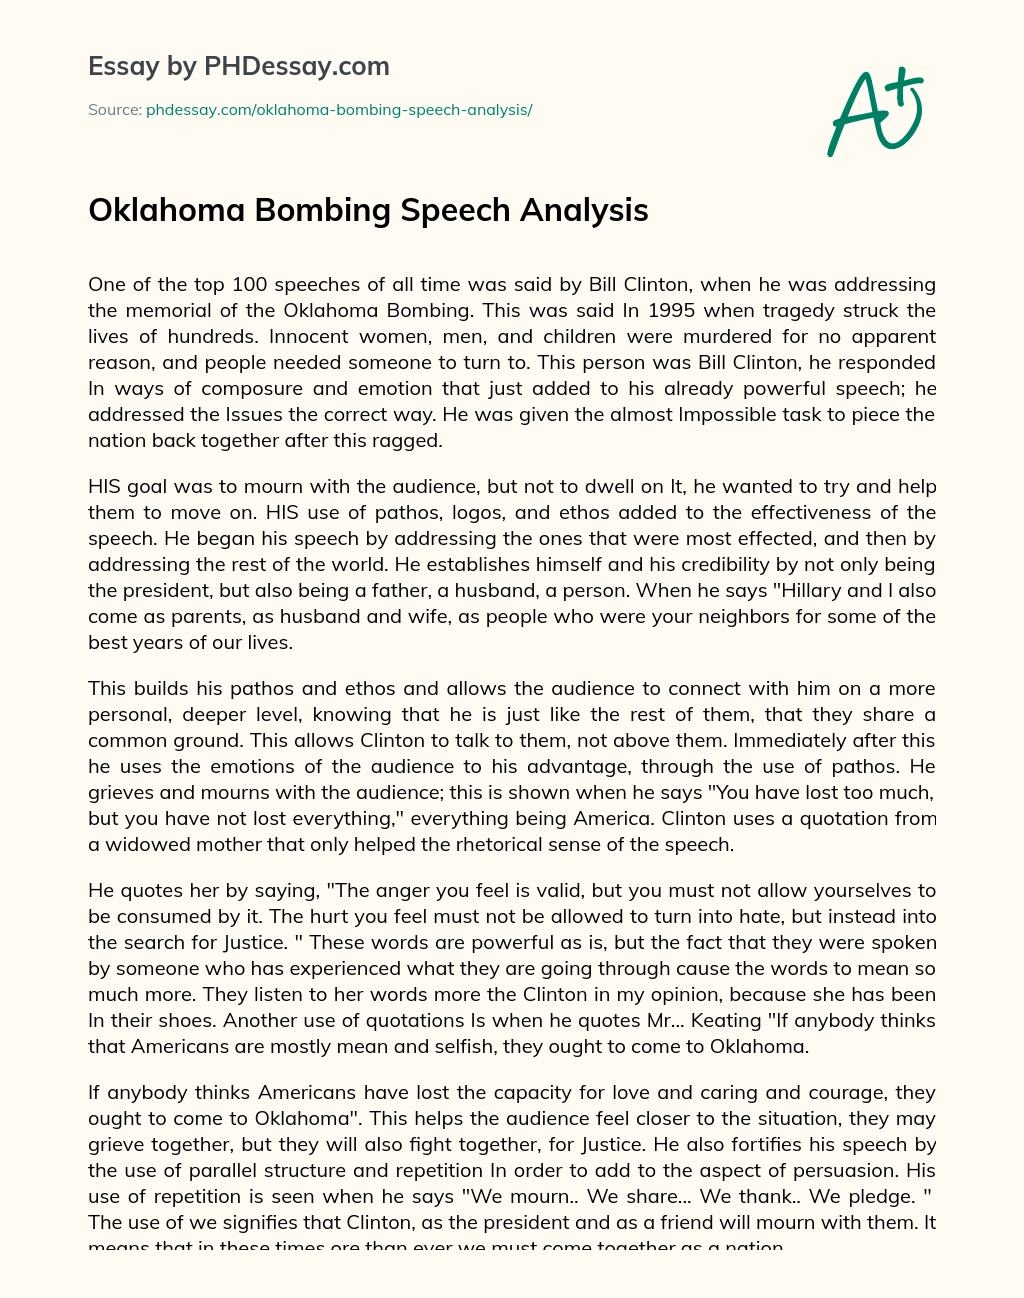 Oklahoma Bombing Speech Analysis essay